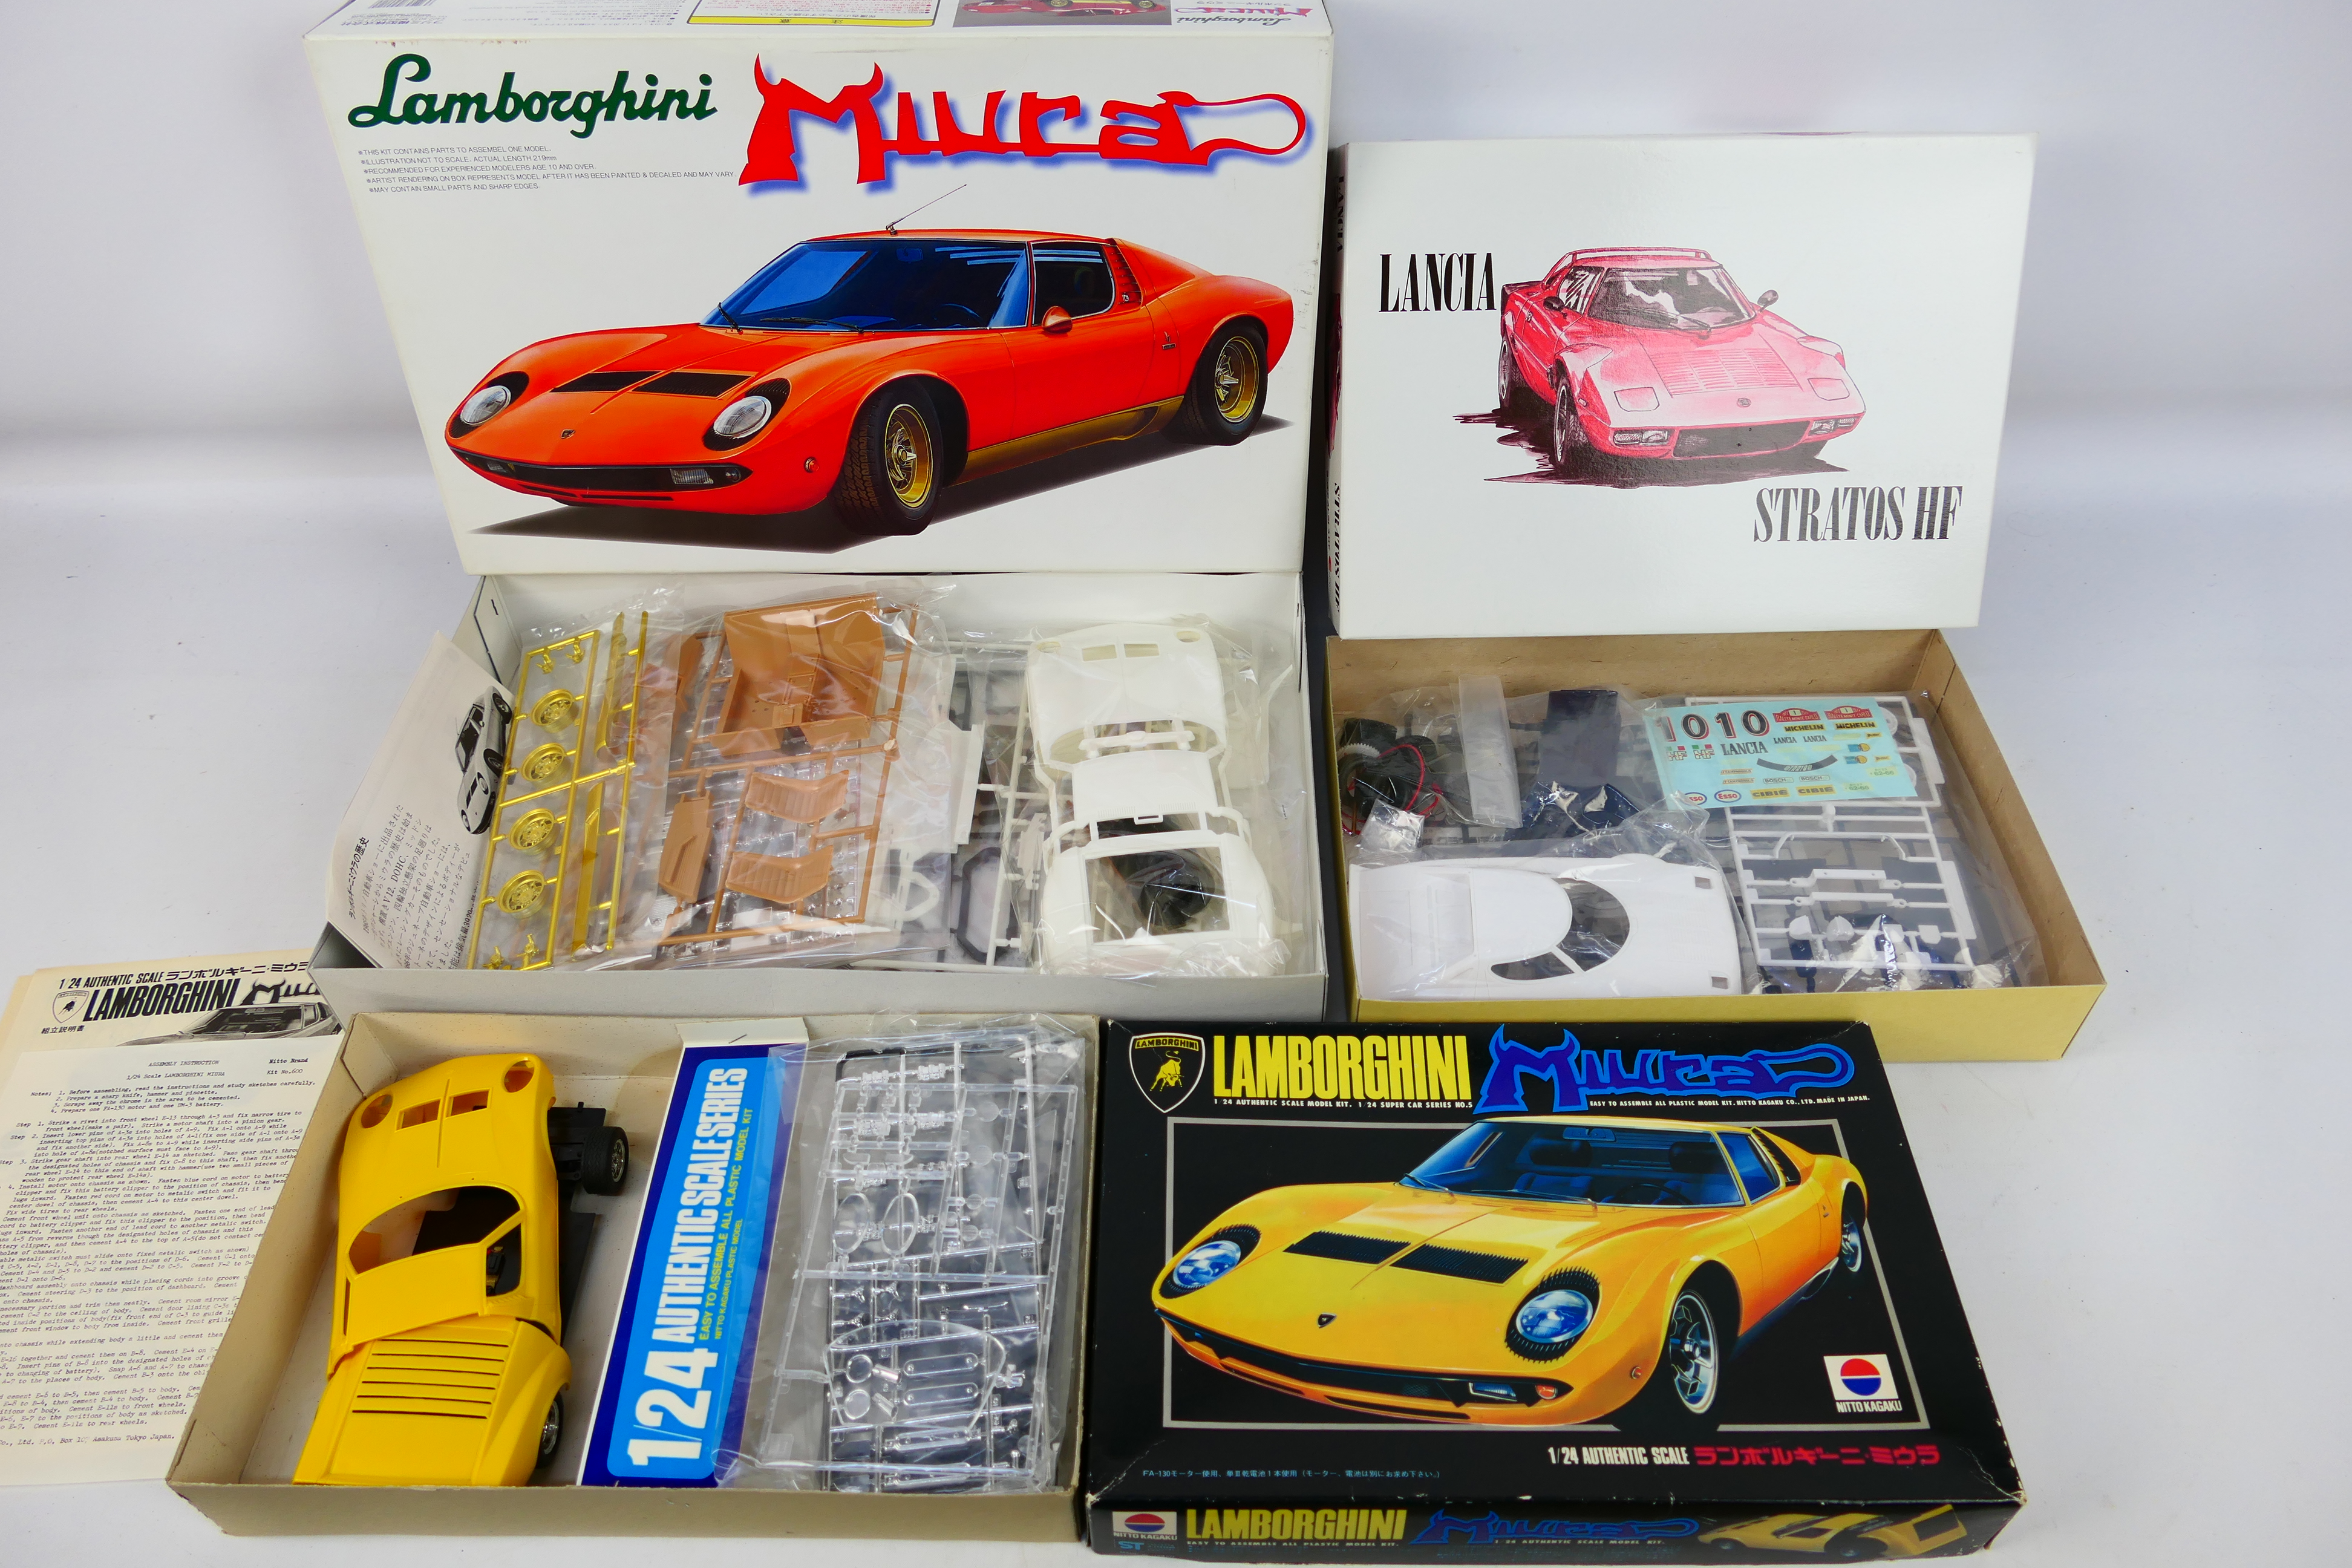 Crown - Fujimi - Nitto Kaguku - Three boxed plastic motor car model kits.